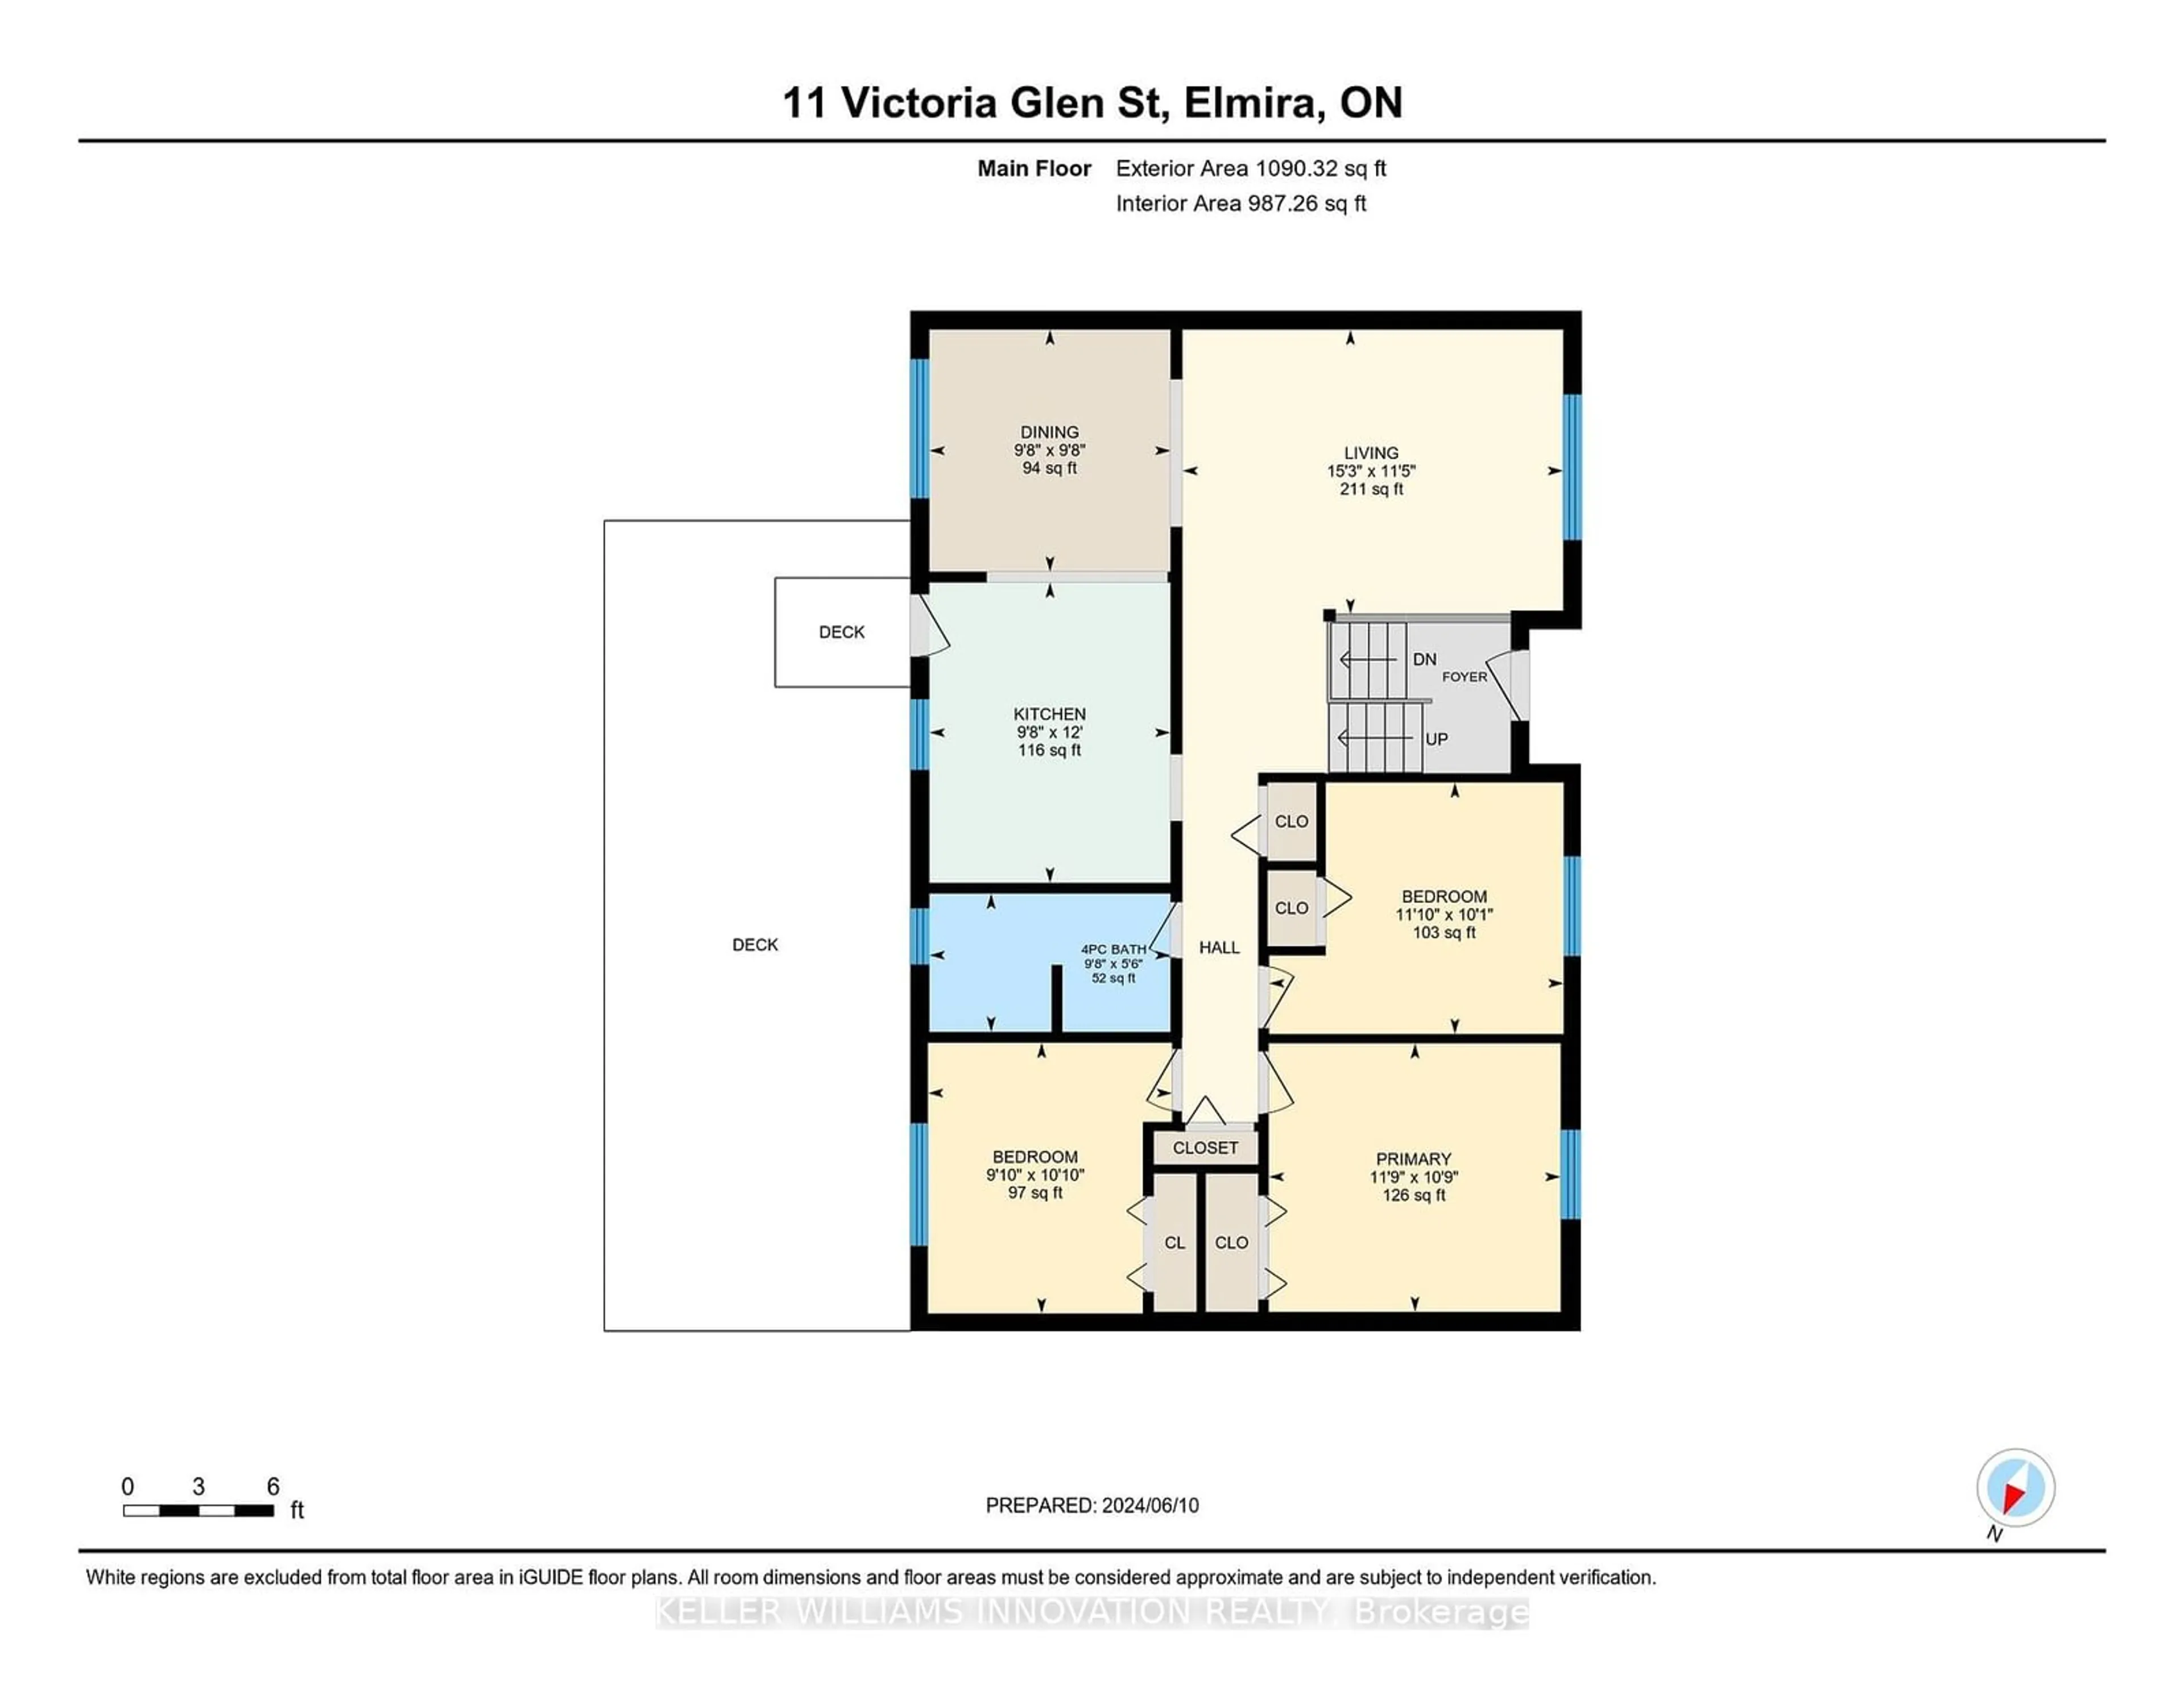 Floor plan for 11 Victoria Glen St, Woolwich Ontario N3B 1R9